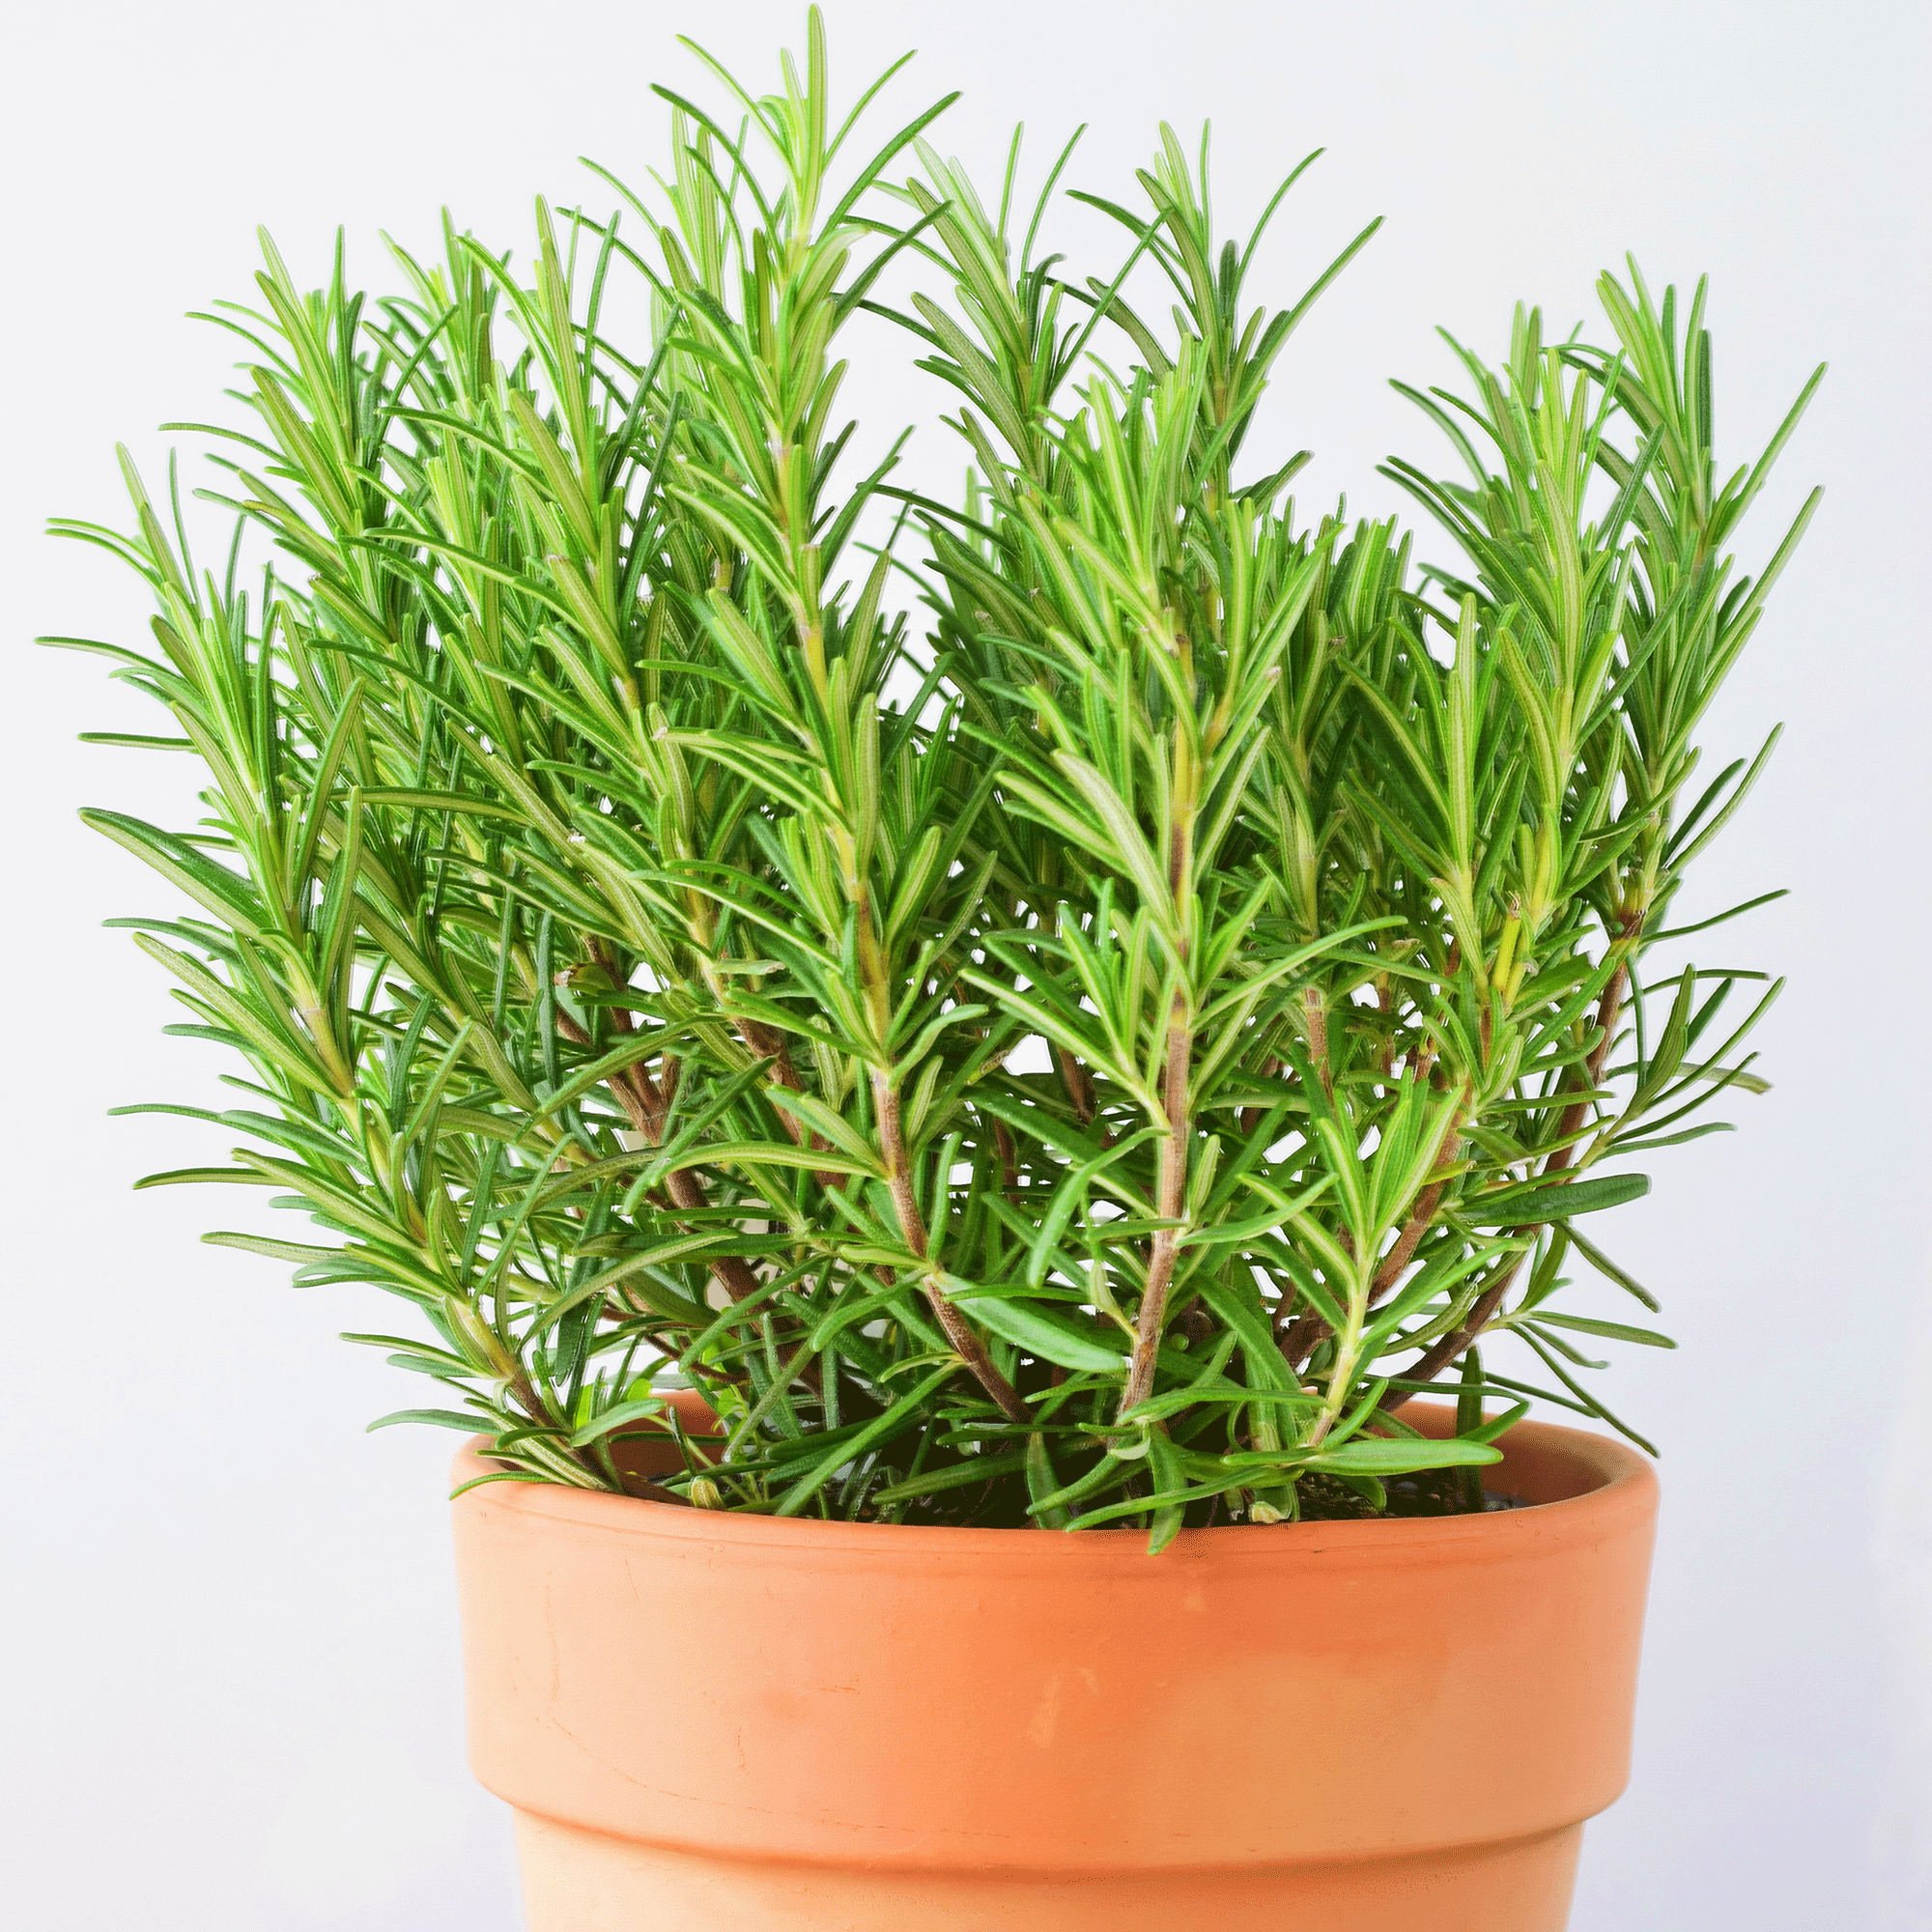 Rosemary plant in terracotta pot